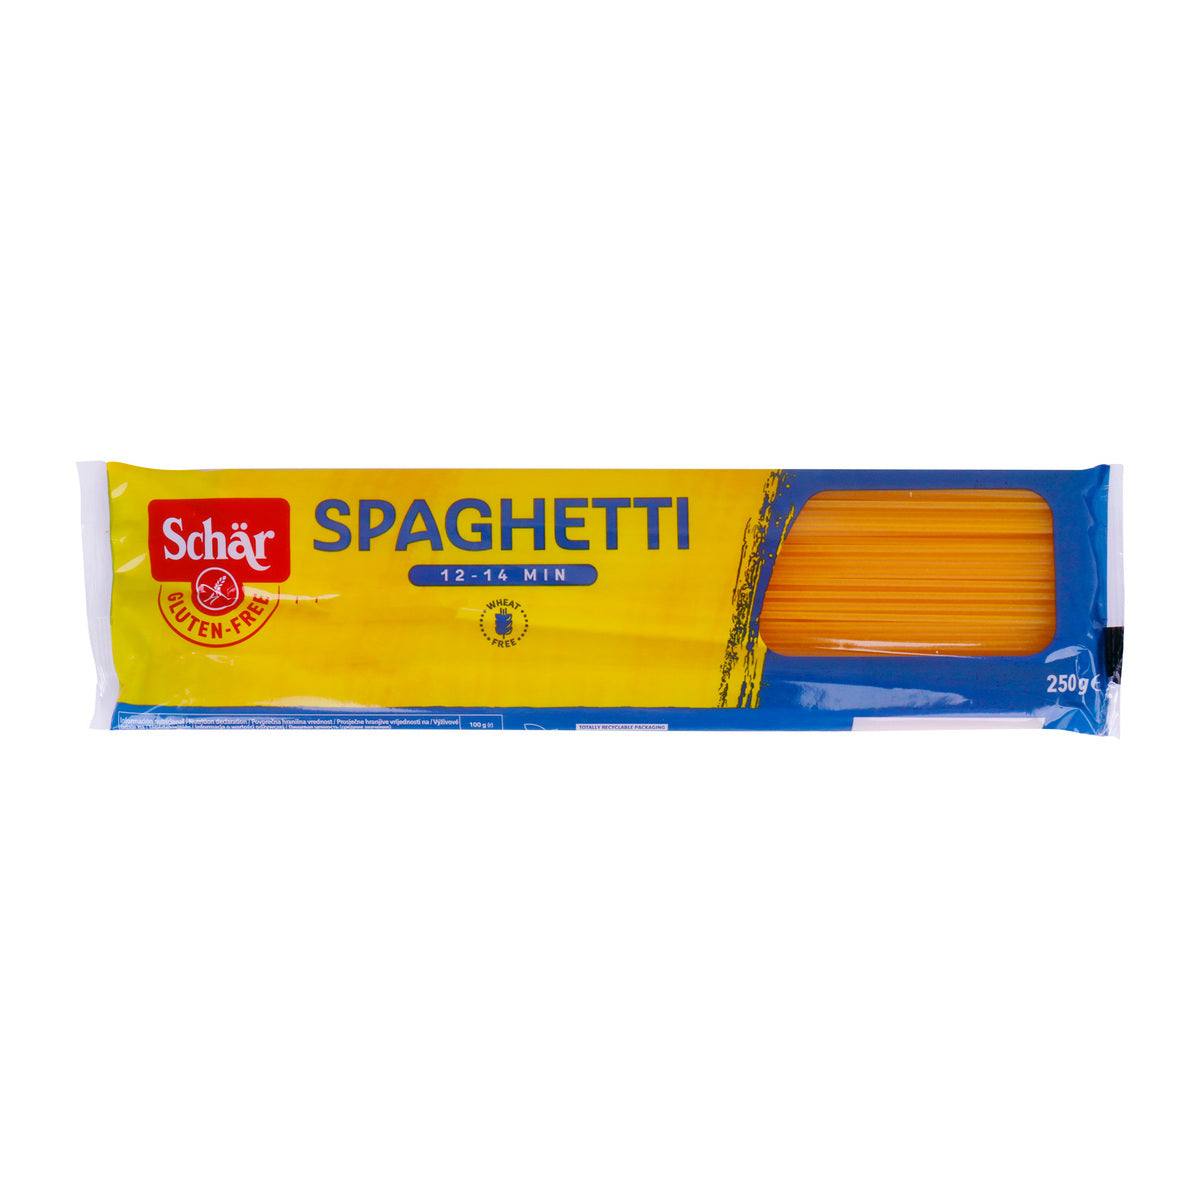 Schar Pasta Spaghetti 250g